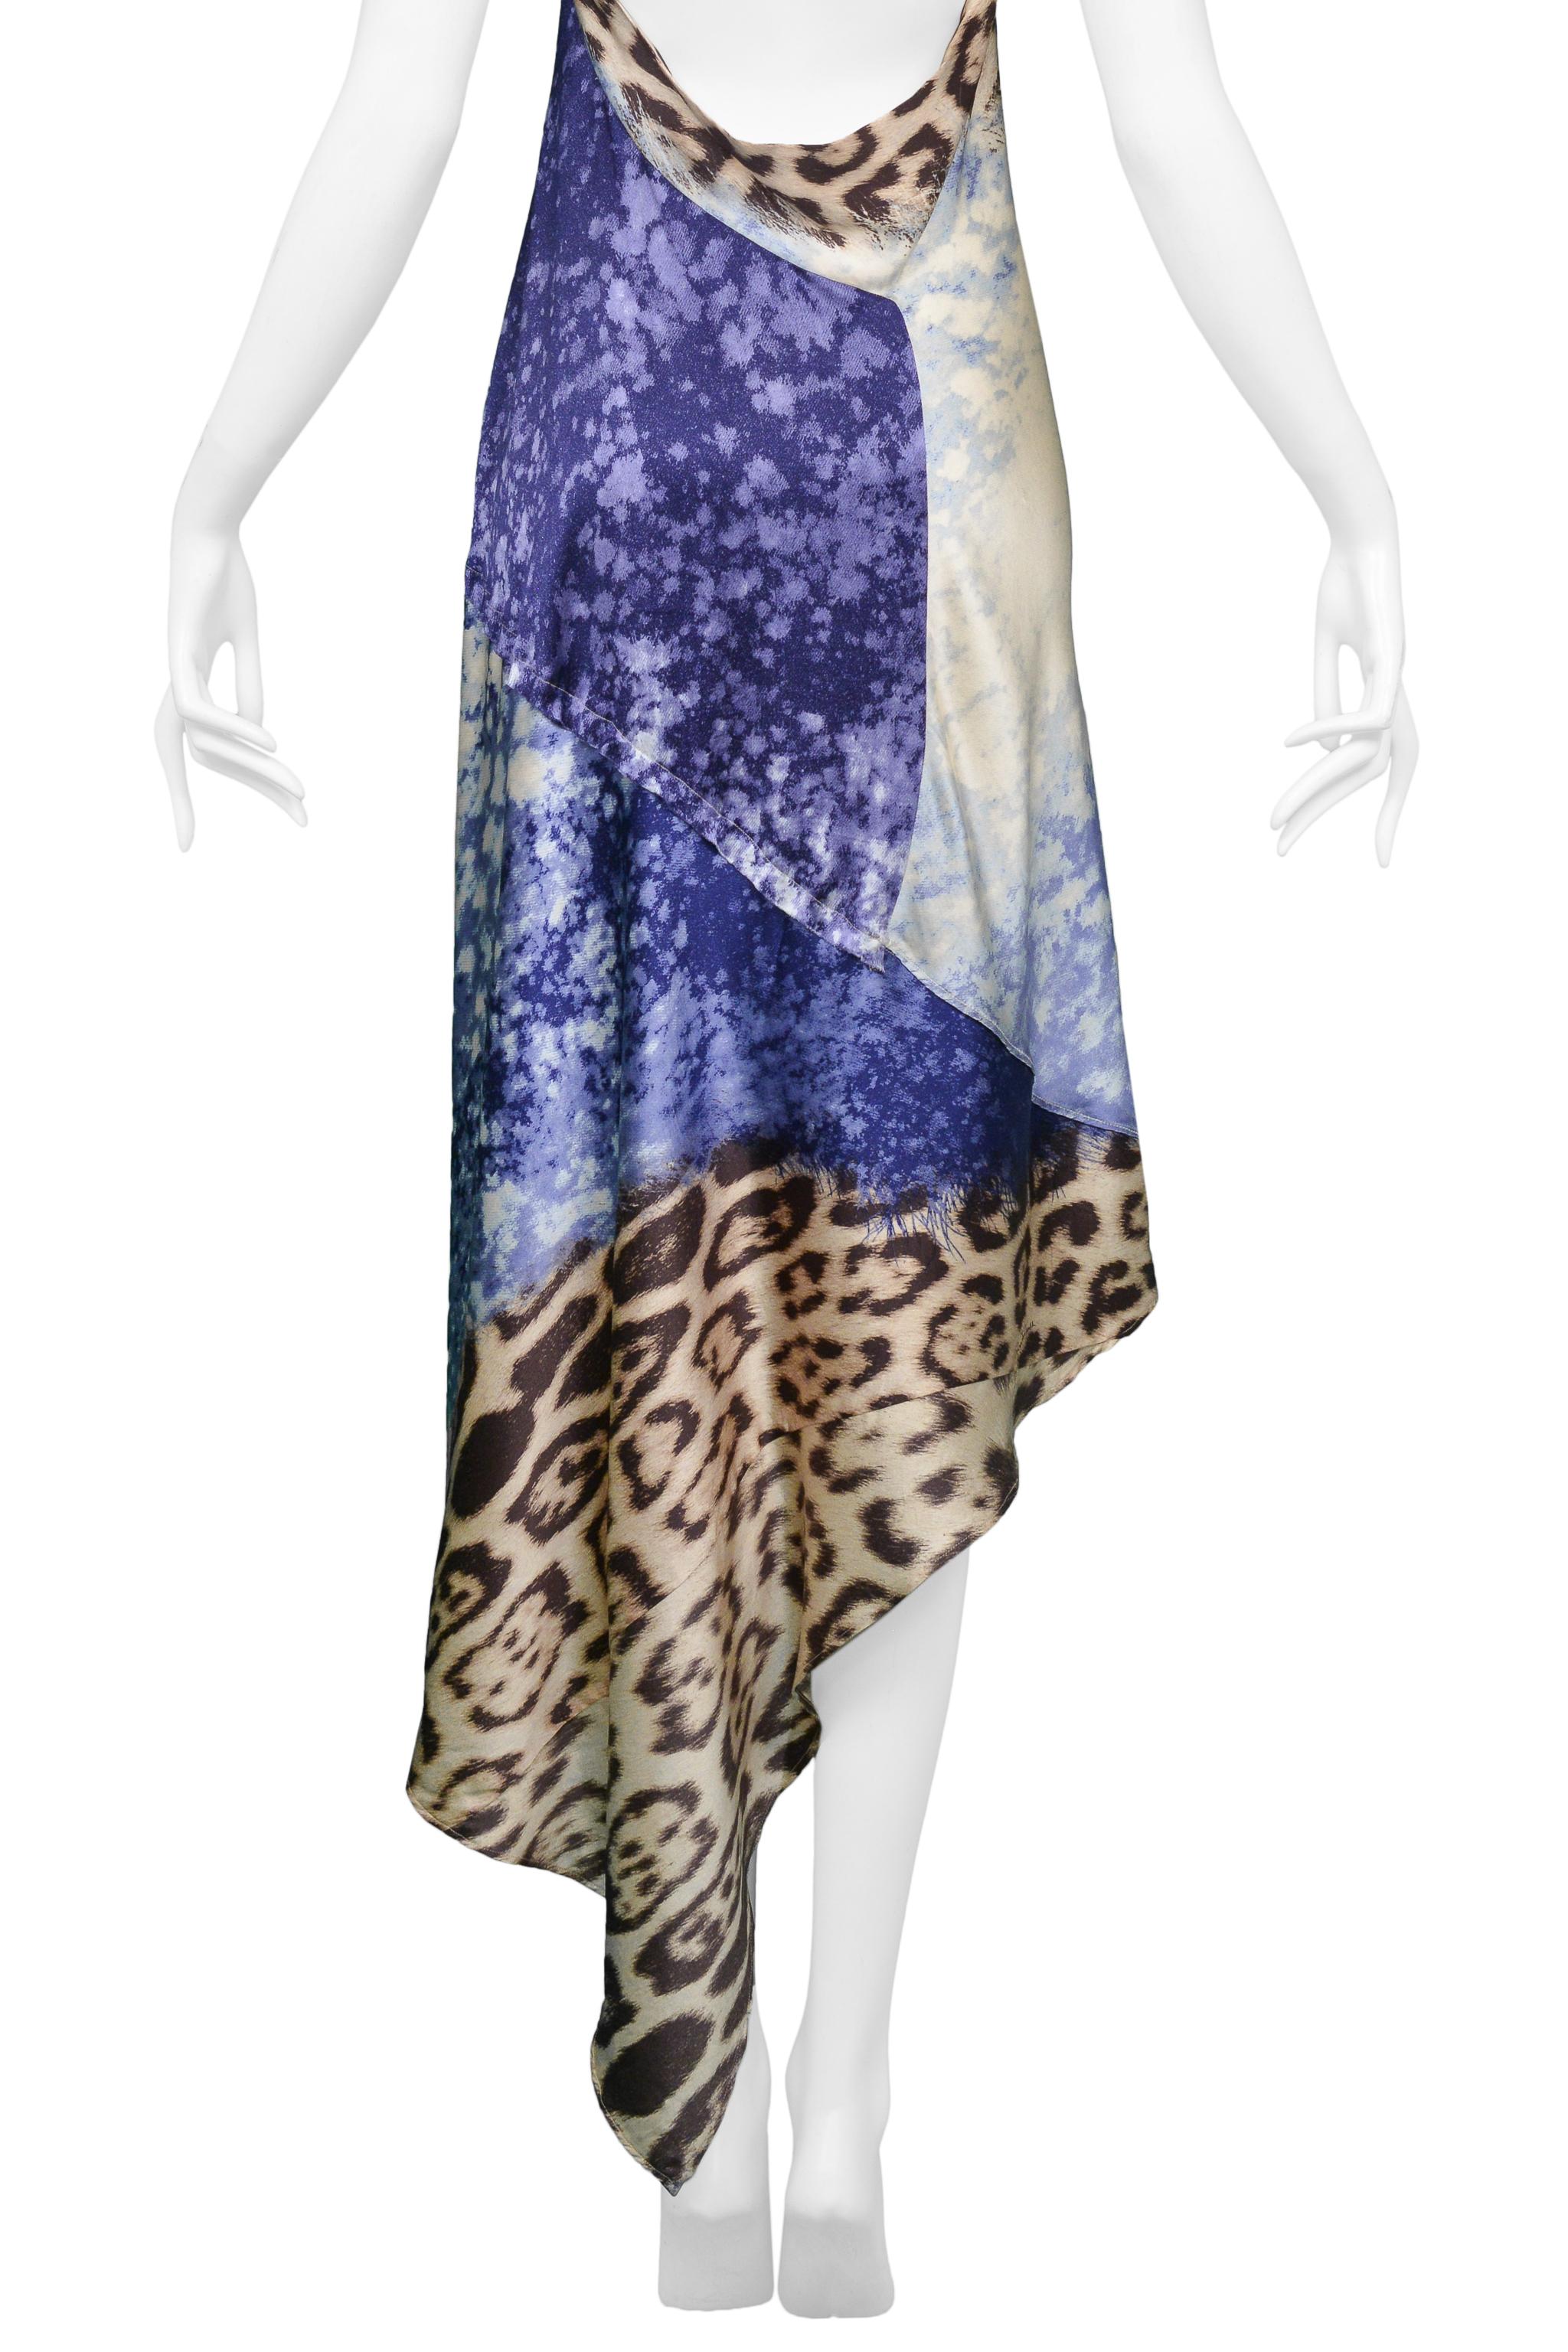 Roberto Cavalli Leopard & Blue Acid Print Halter Dress 2001 1